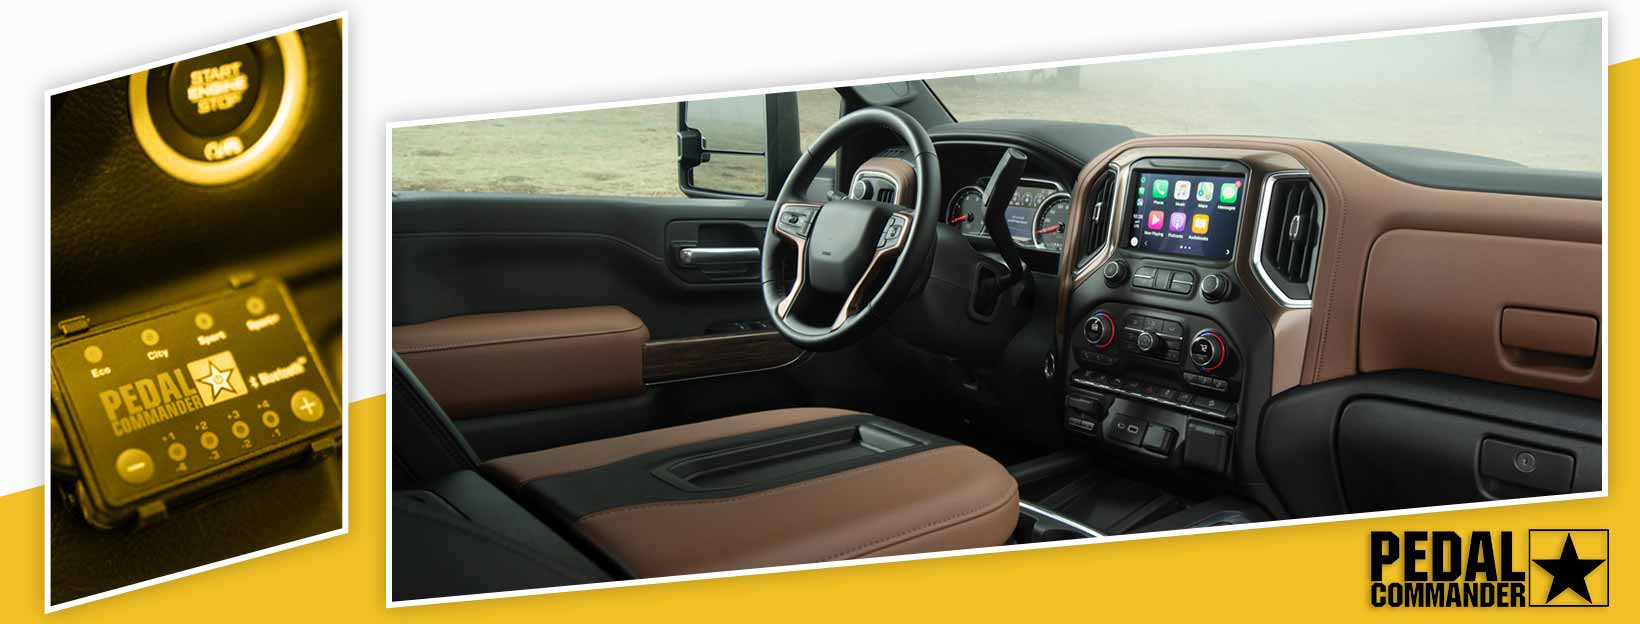 Pedal Commander for Chevrolet Silverado 2500HD - interior